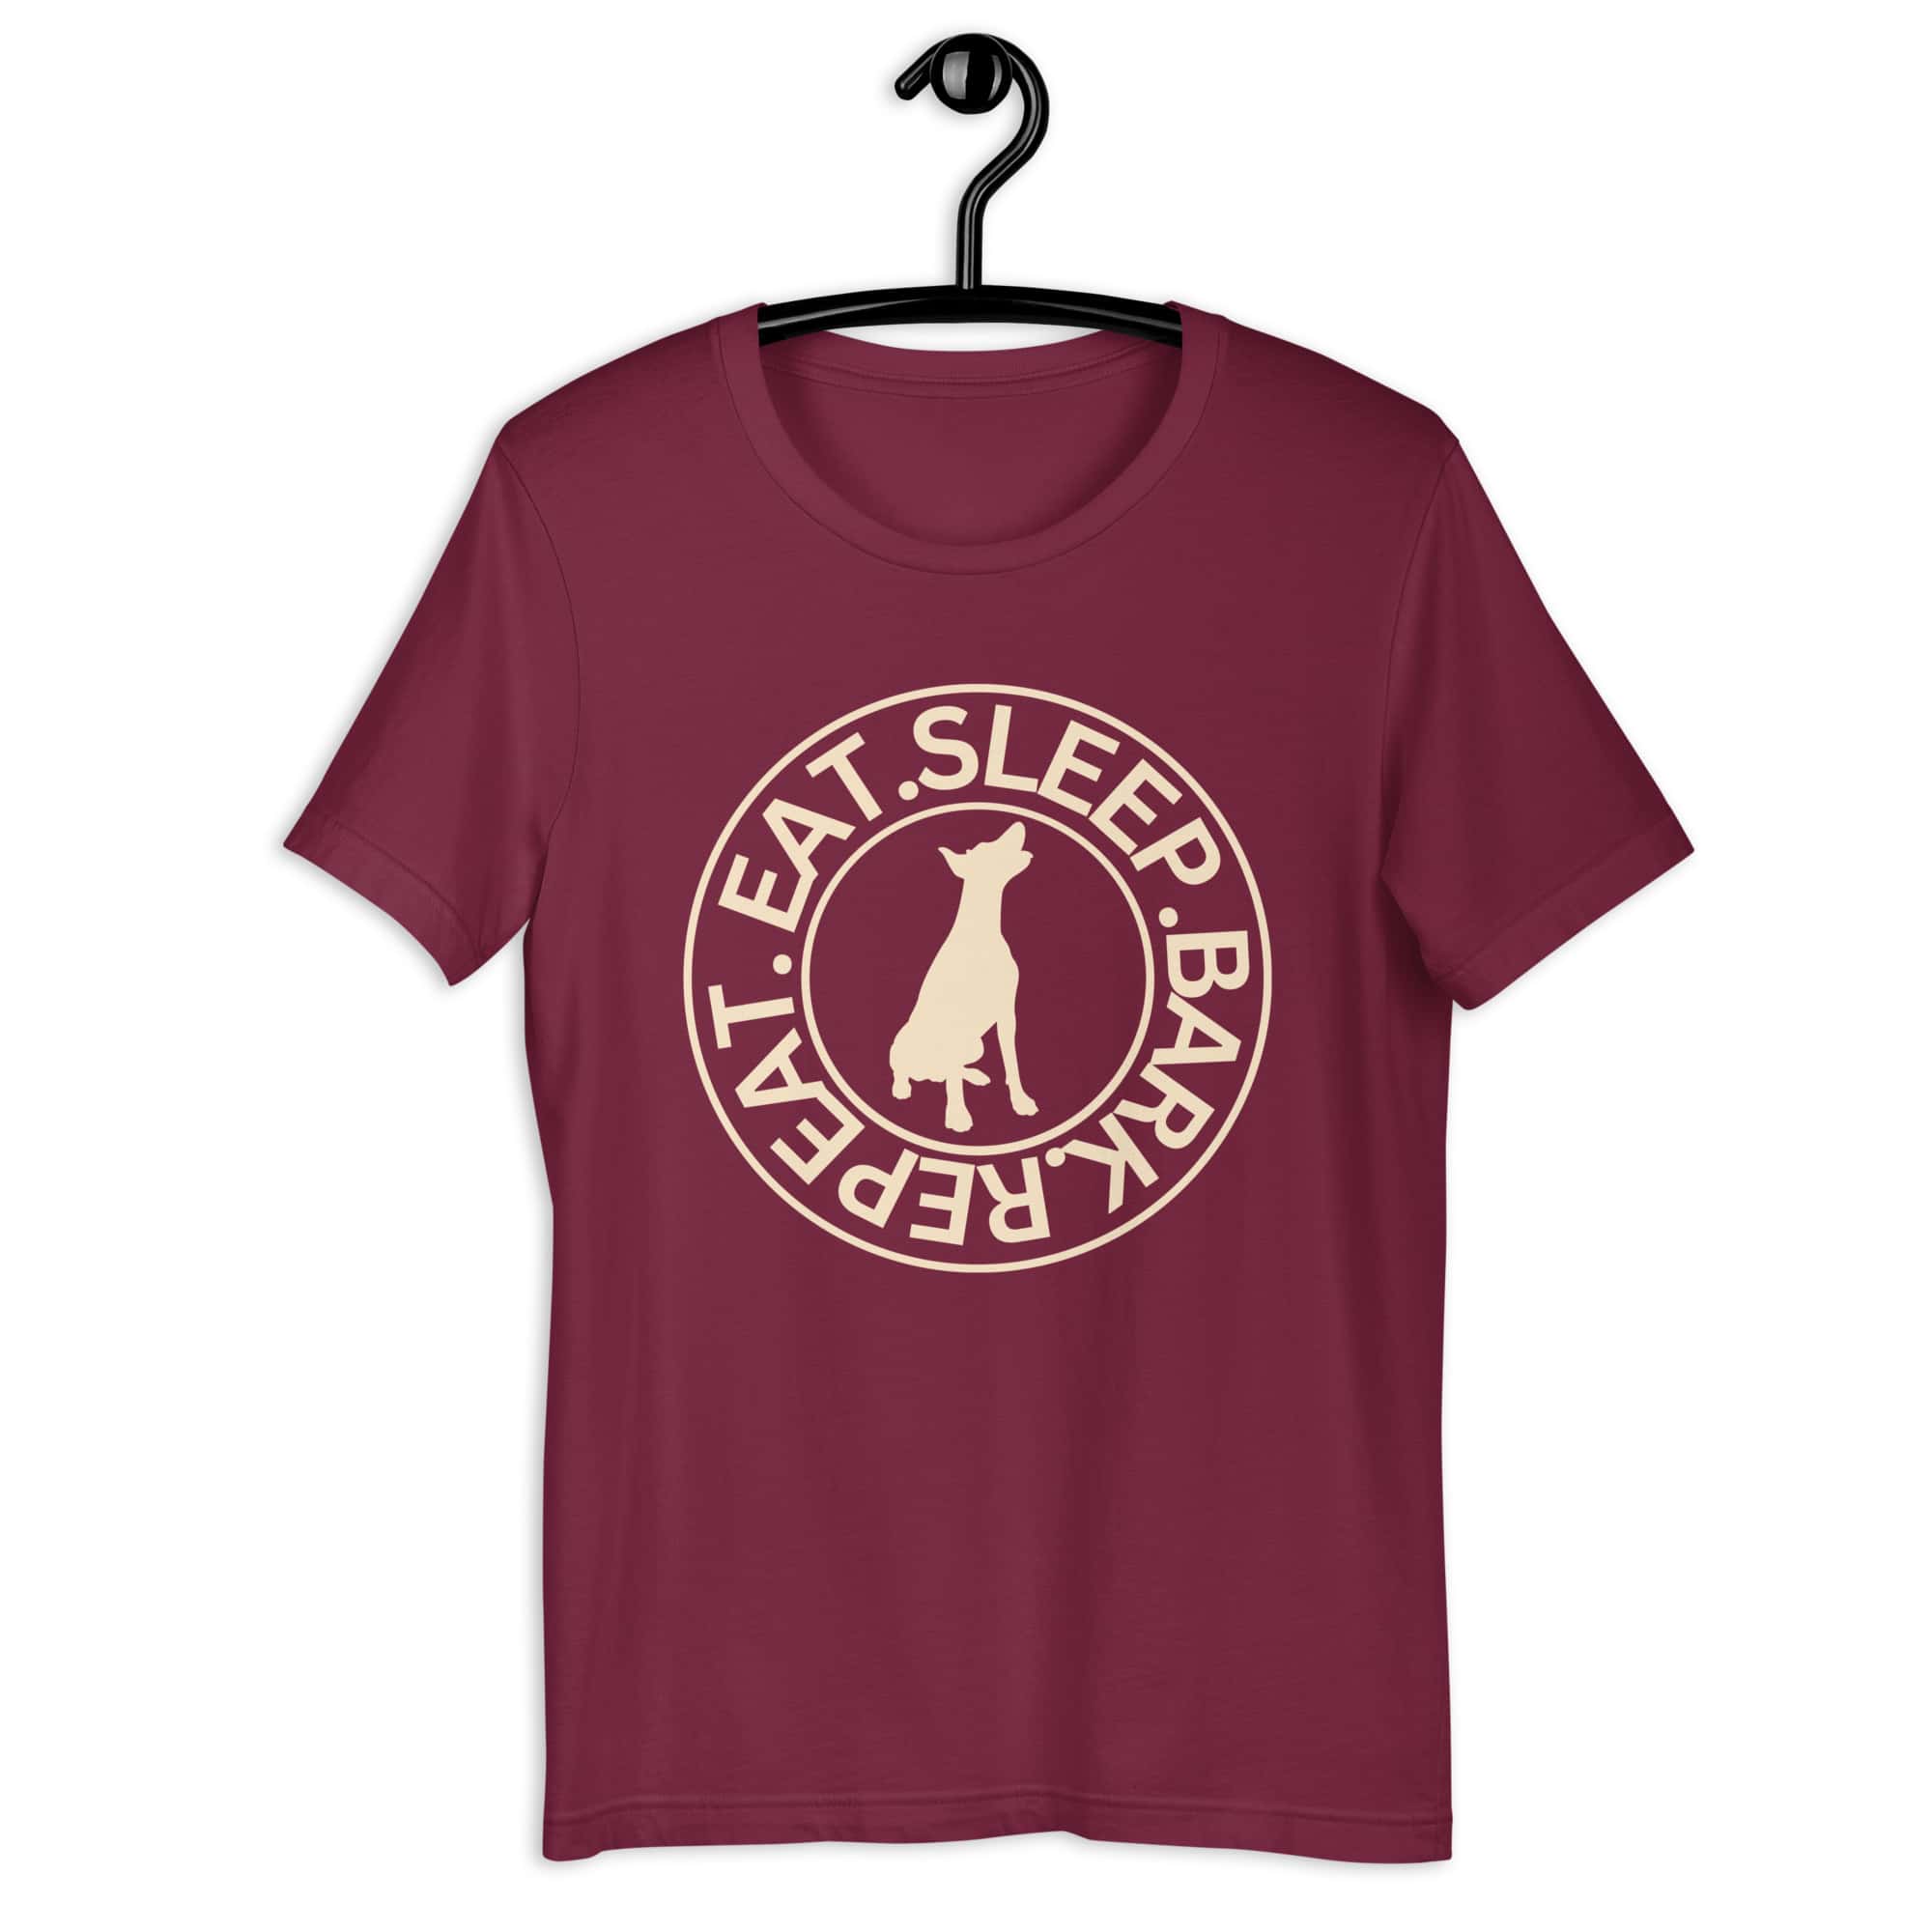 Eat Sleep Bark Repeat Terrier Unisex T-Shirt. Maroon